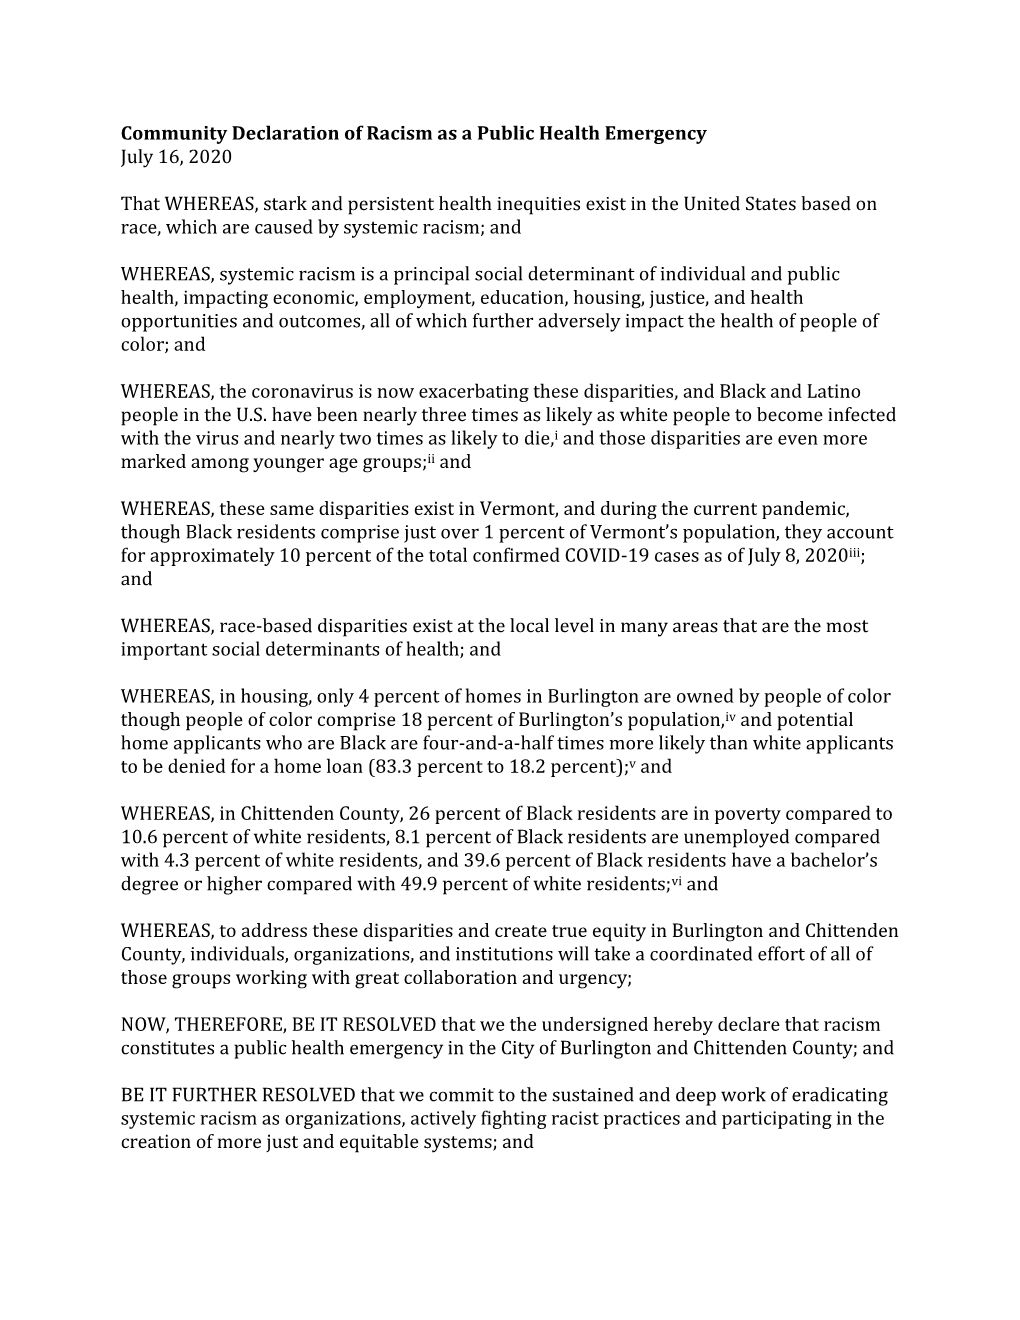 Community Declaration of Racism As a Public Health Emergency July 16, 2020